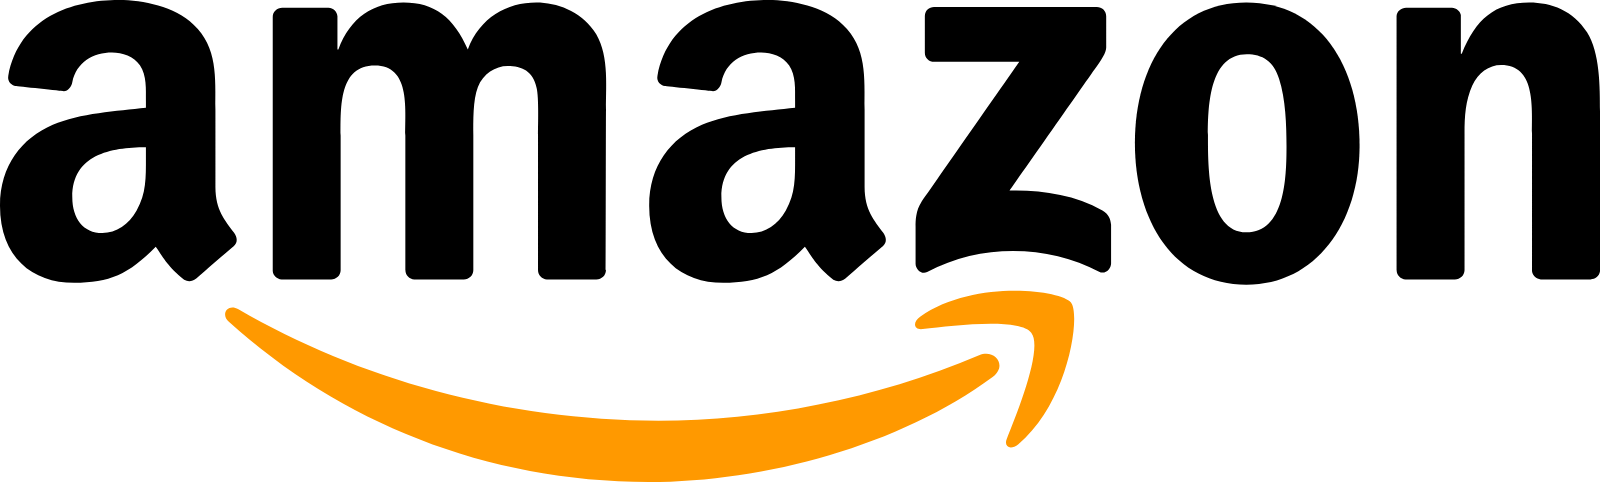 Amazon It companies in Cape Town